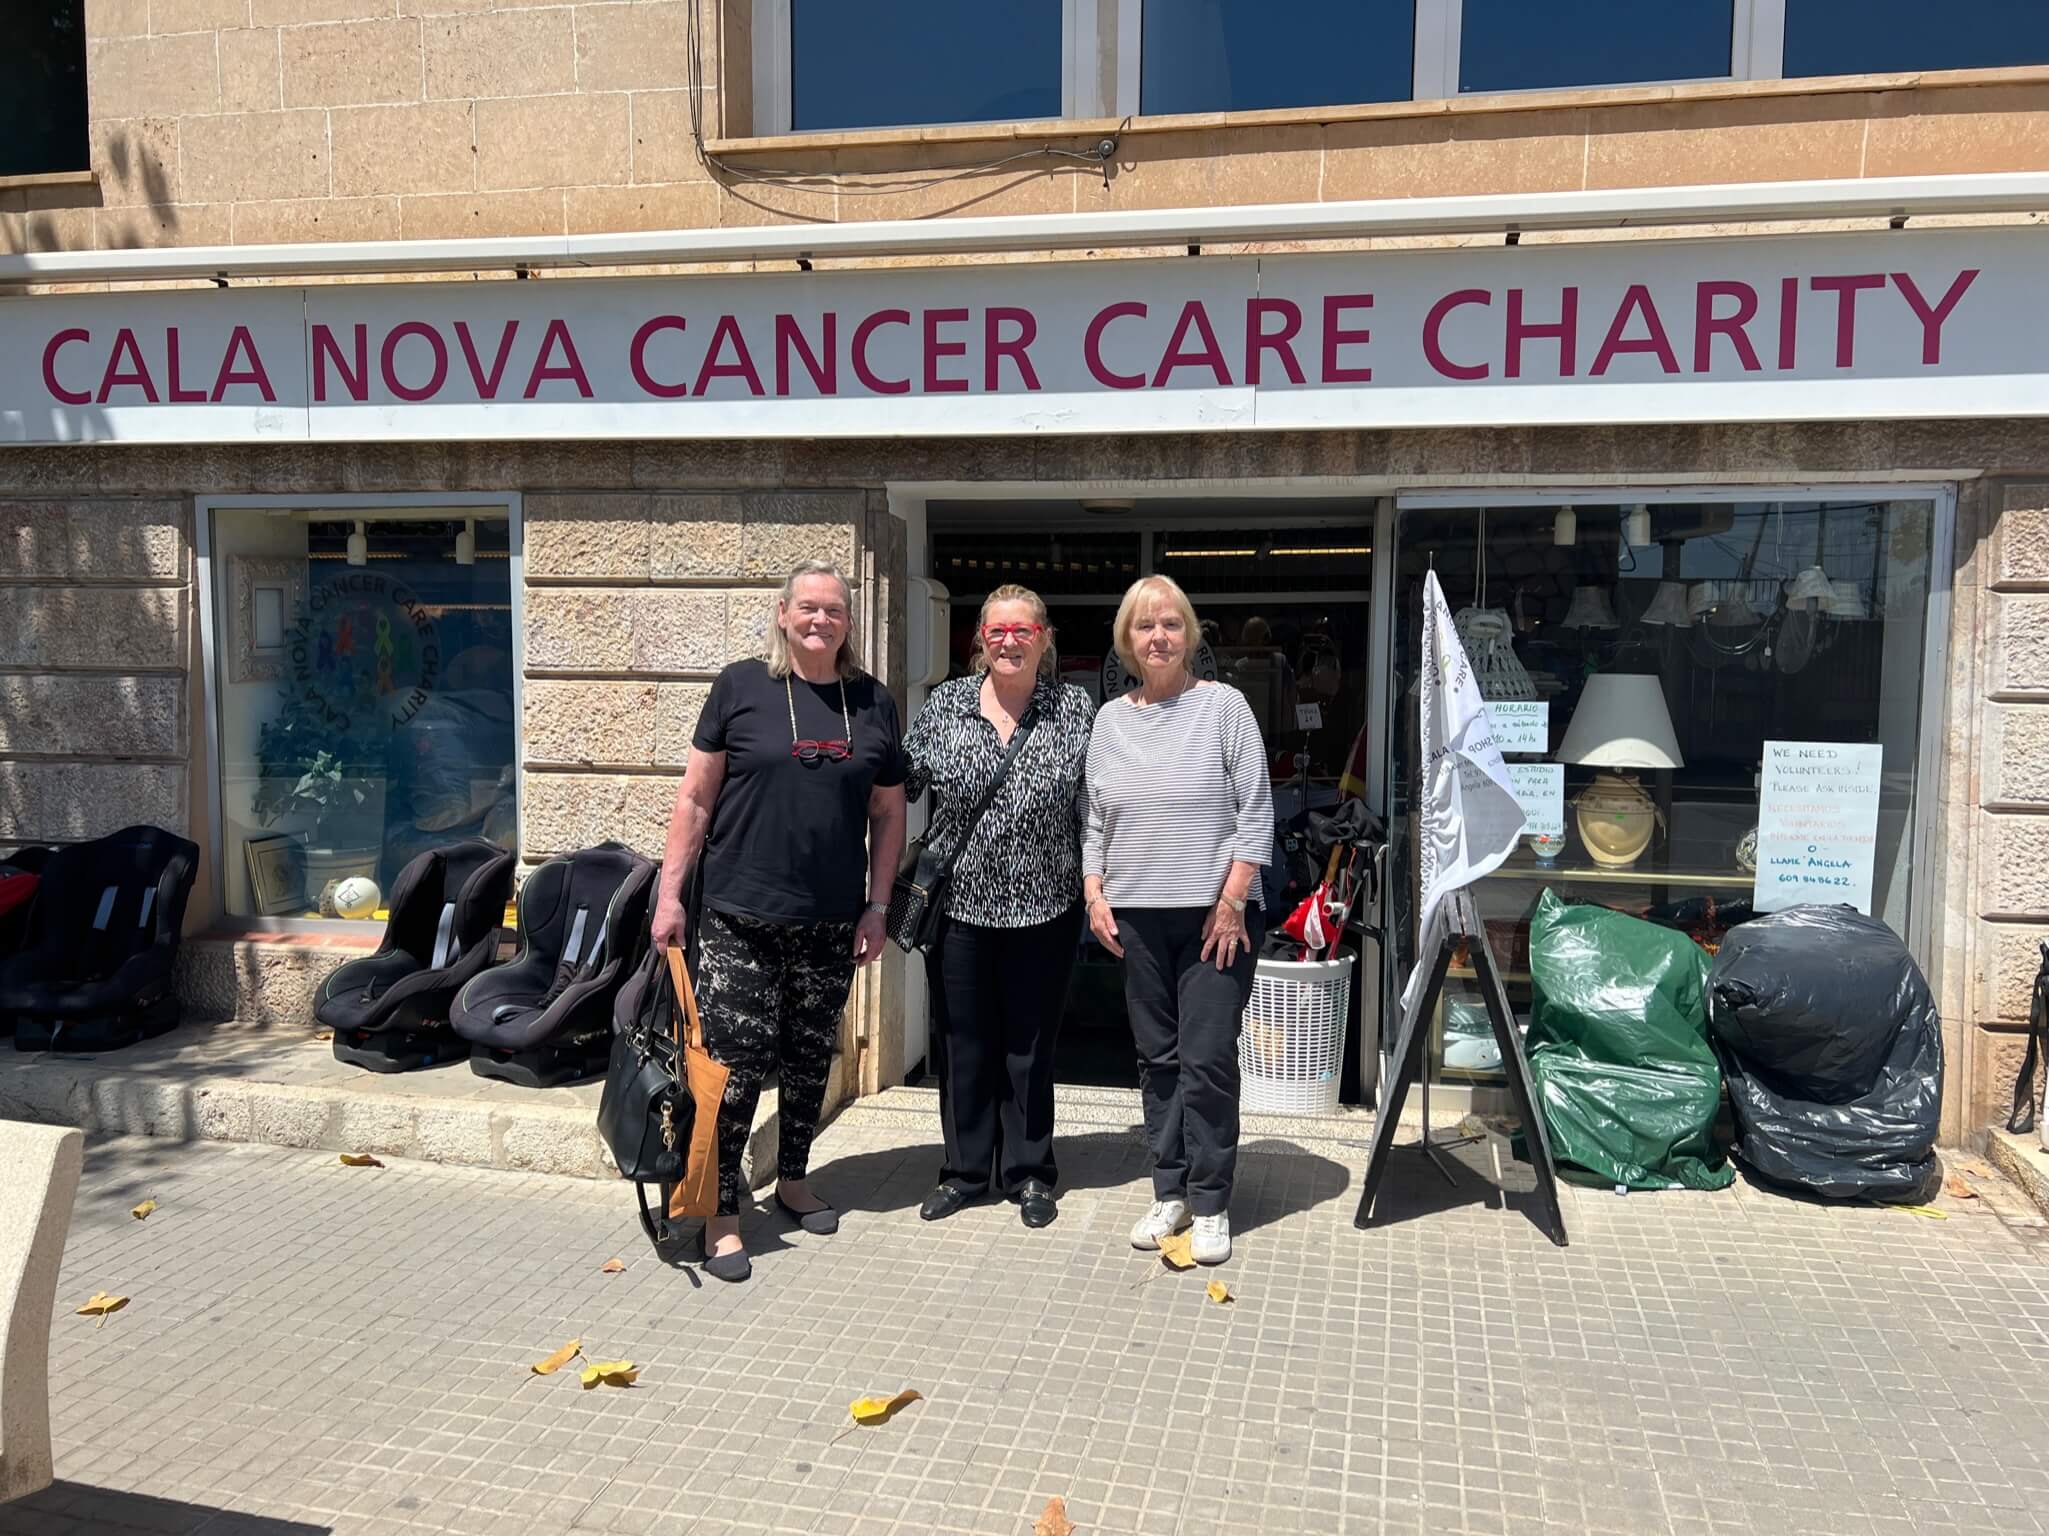 Cala Nova Cancer Care Charity